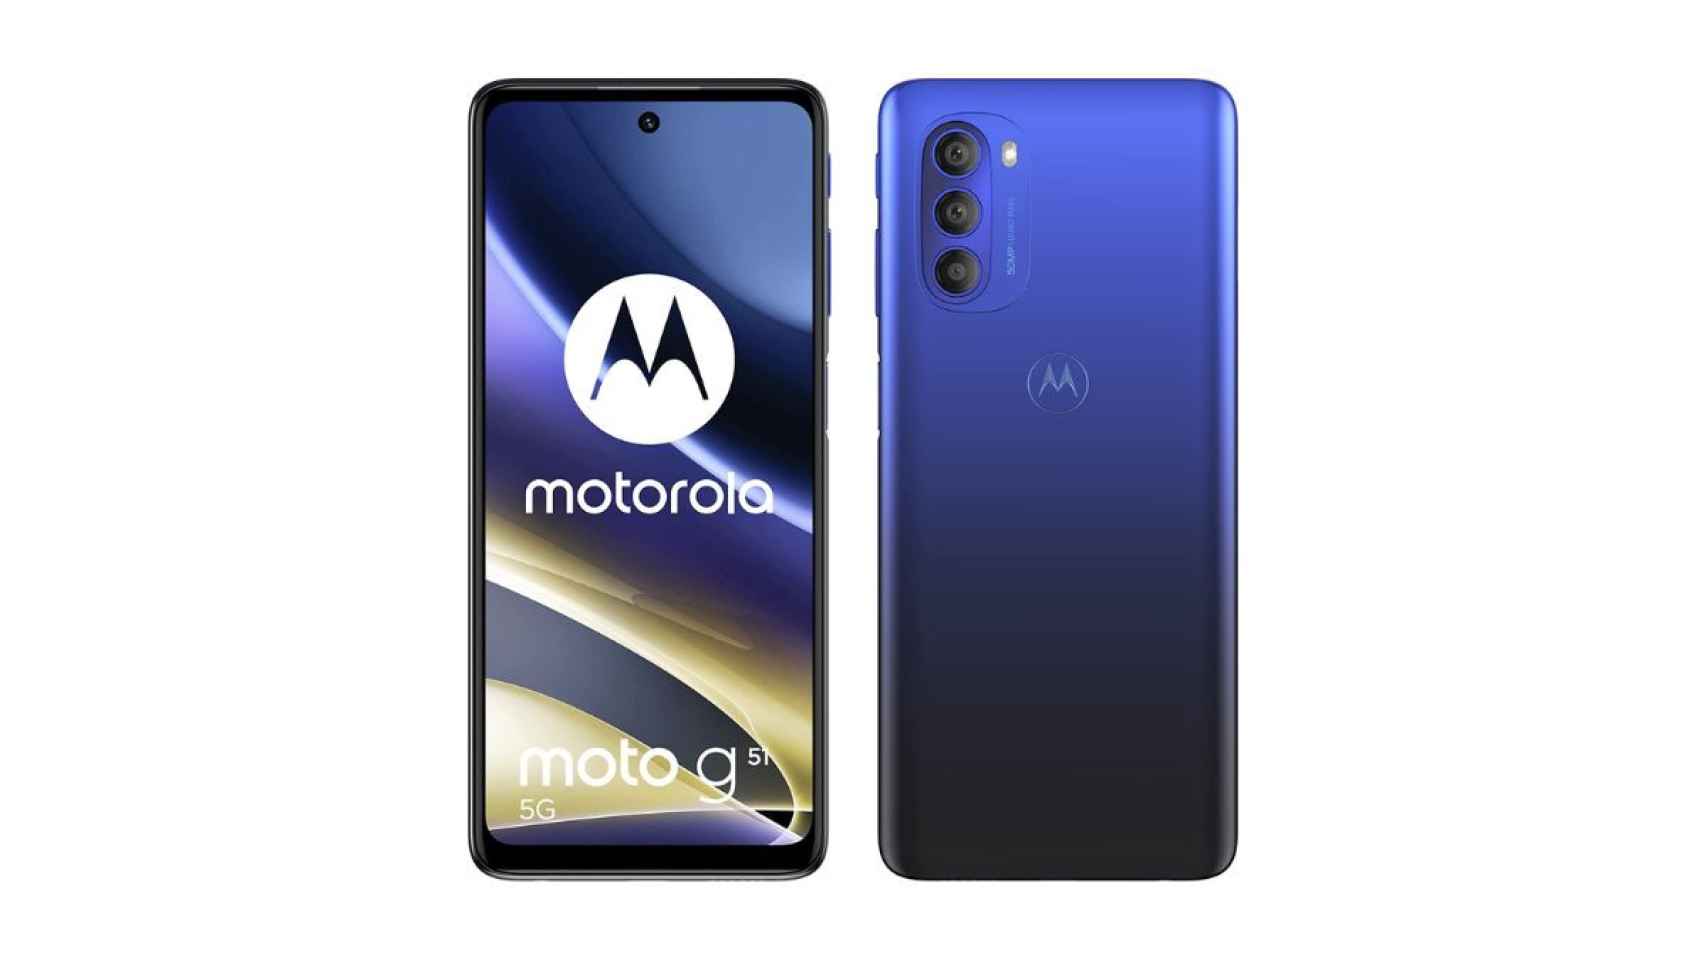 Motorola Moto g51